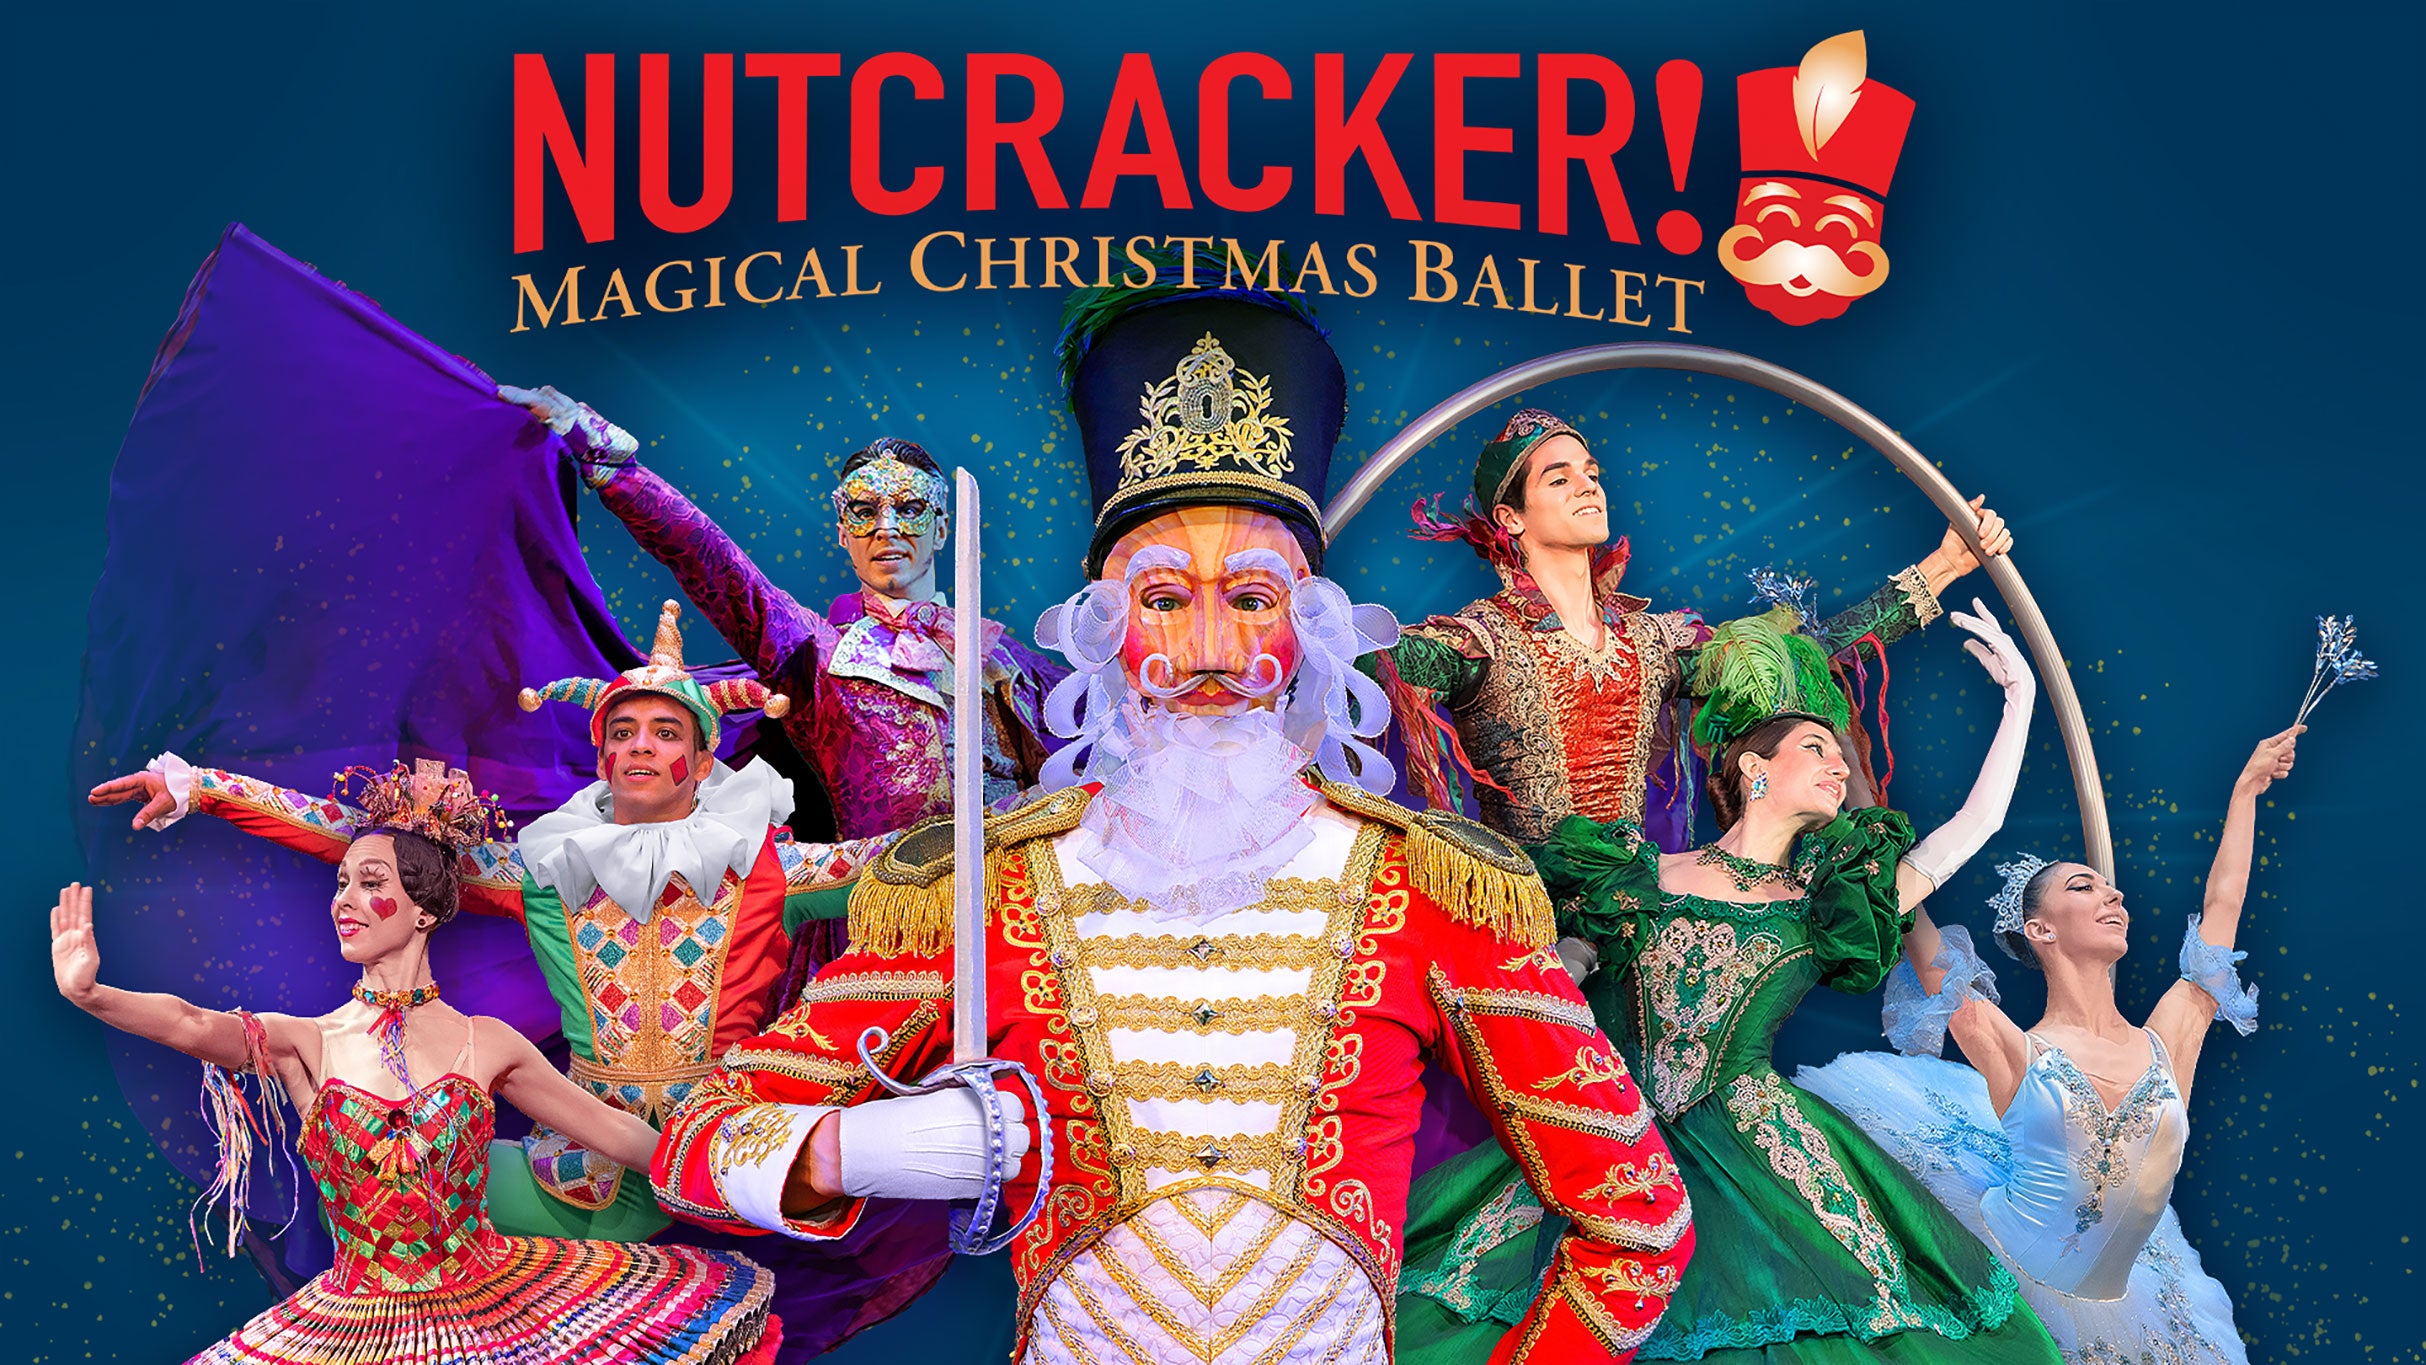 NUTCRACKER! Magical Christmas Ballet at Bob Hope Theatre